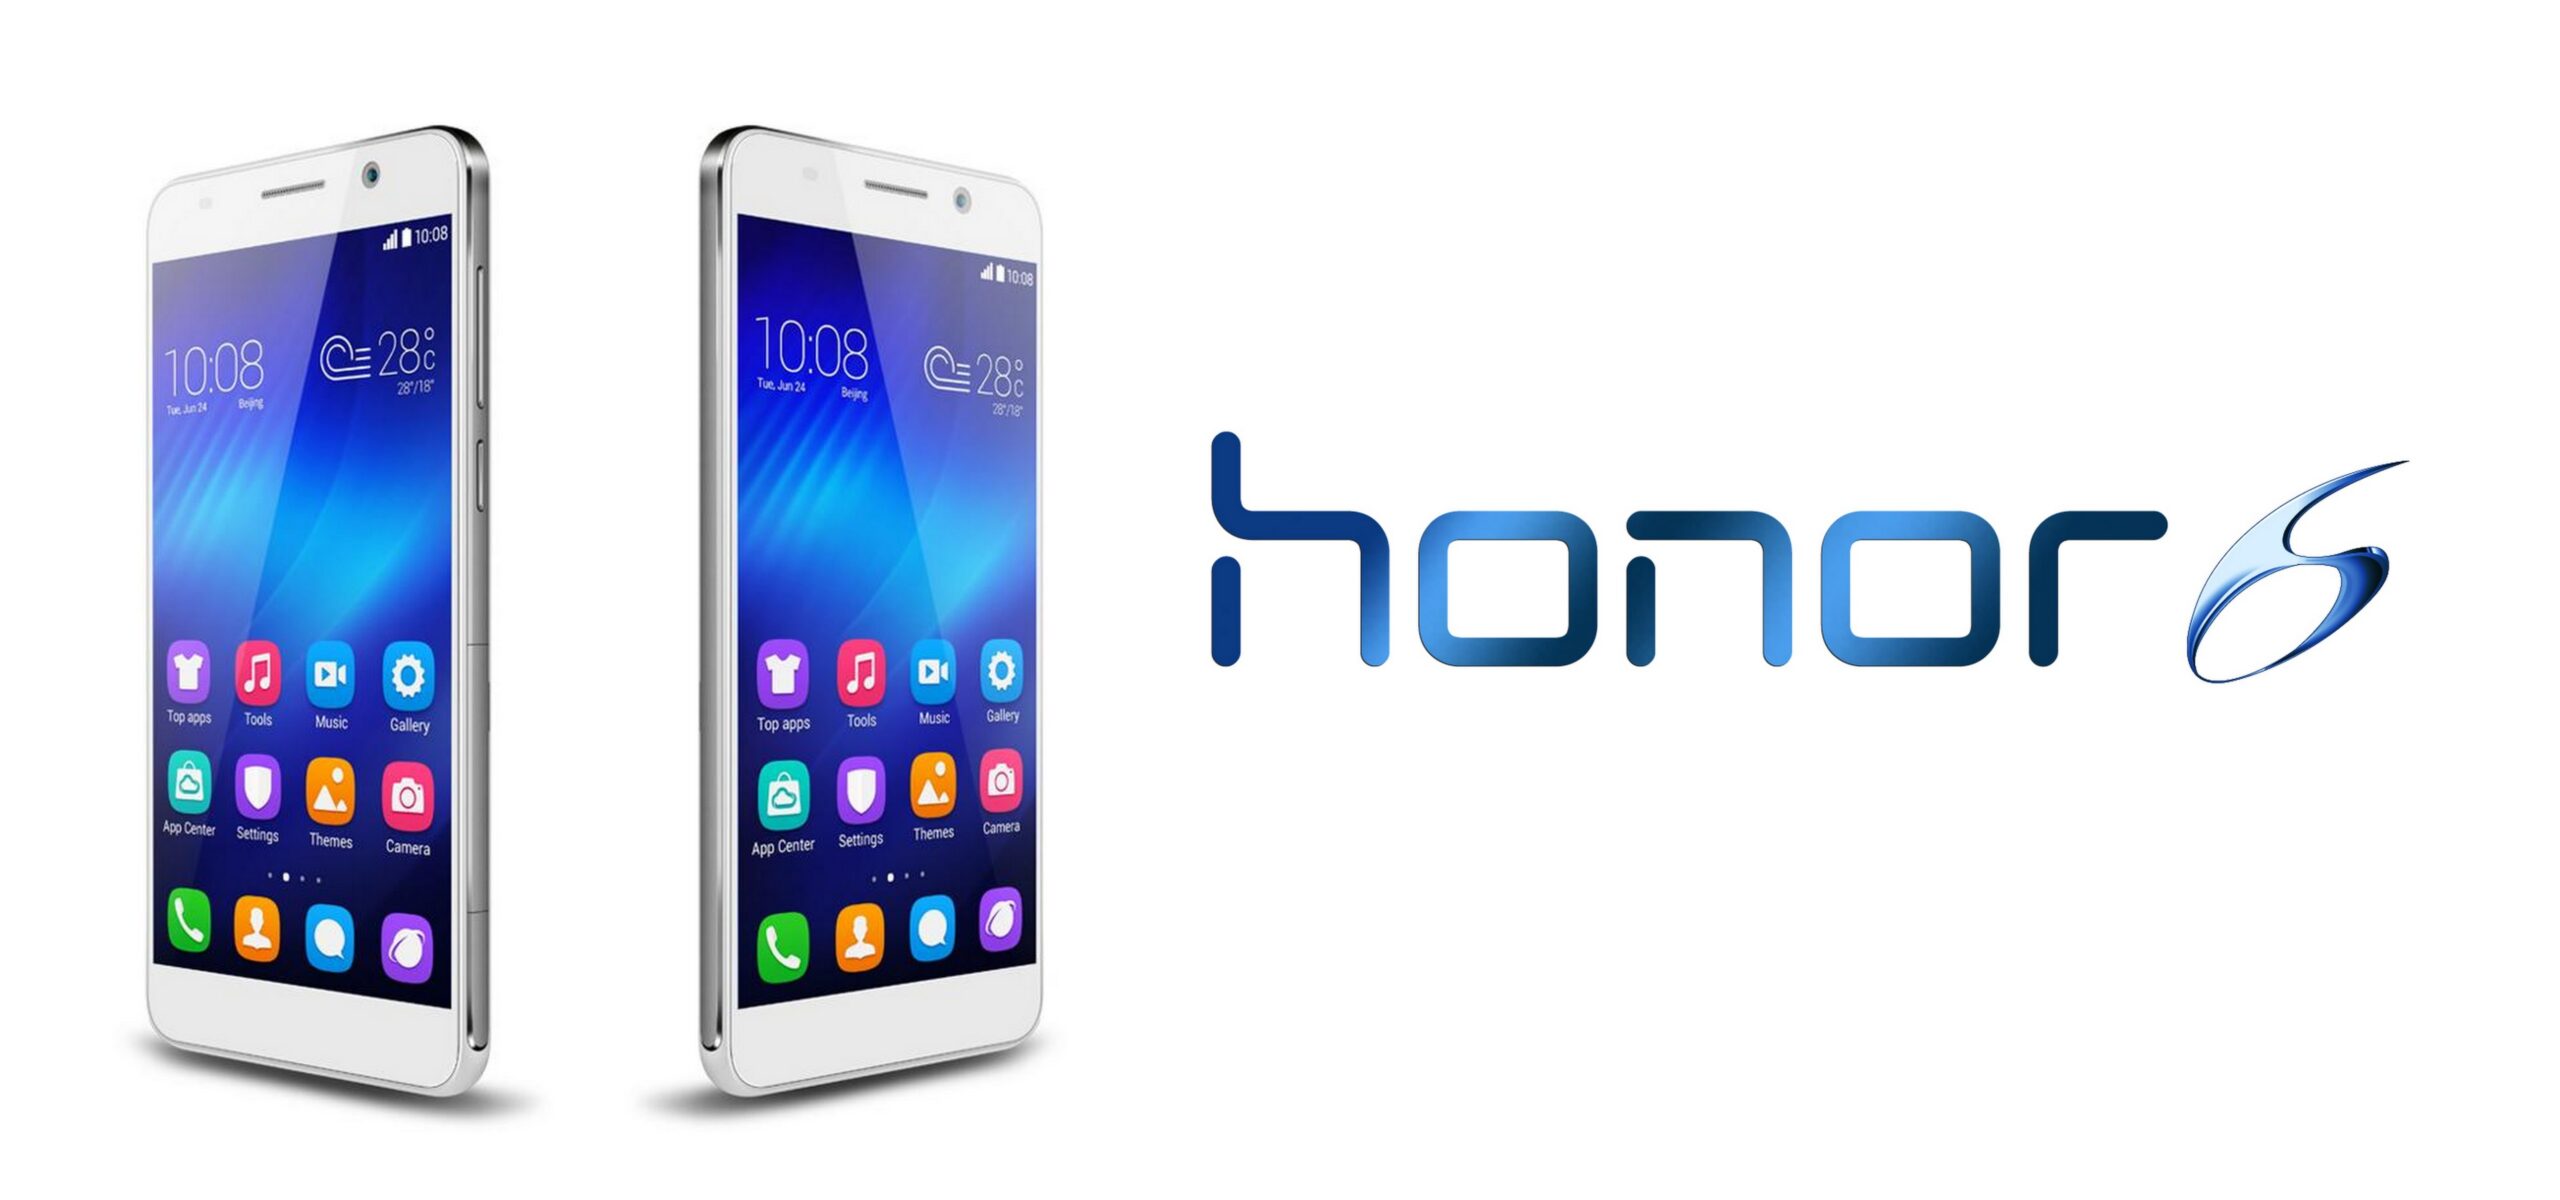 Nowa marka telefonów wkracza na polski rynek honor6 Mediarun Com Honor6 Smartfon scaled